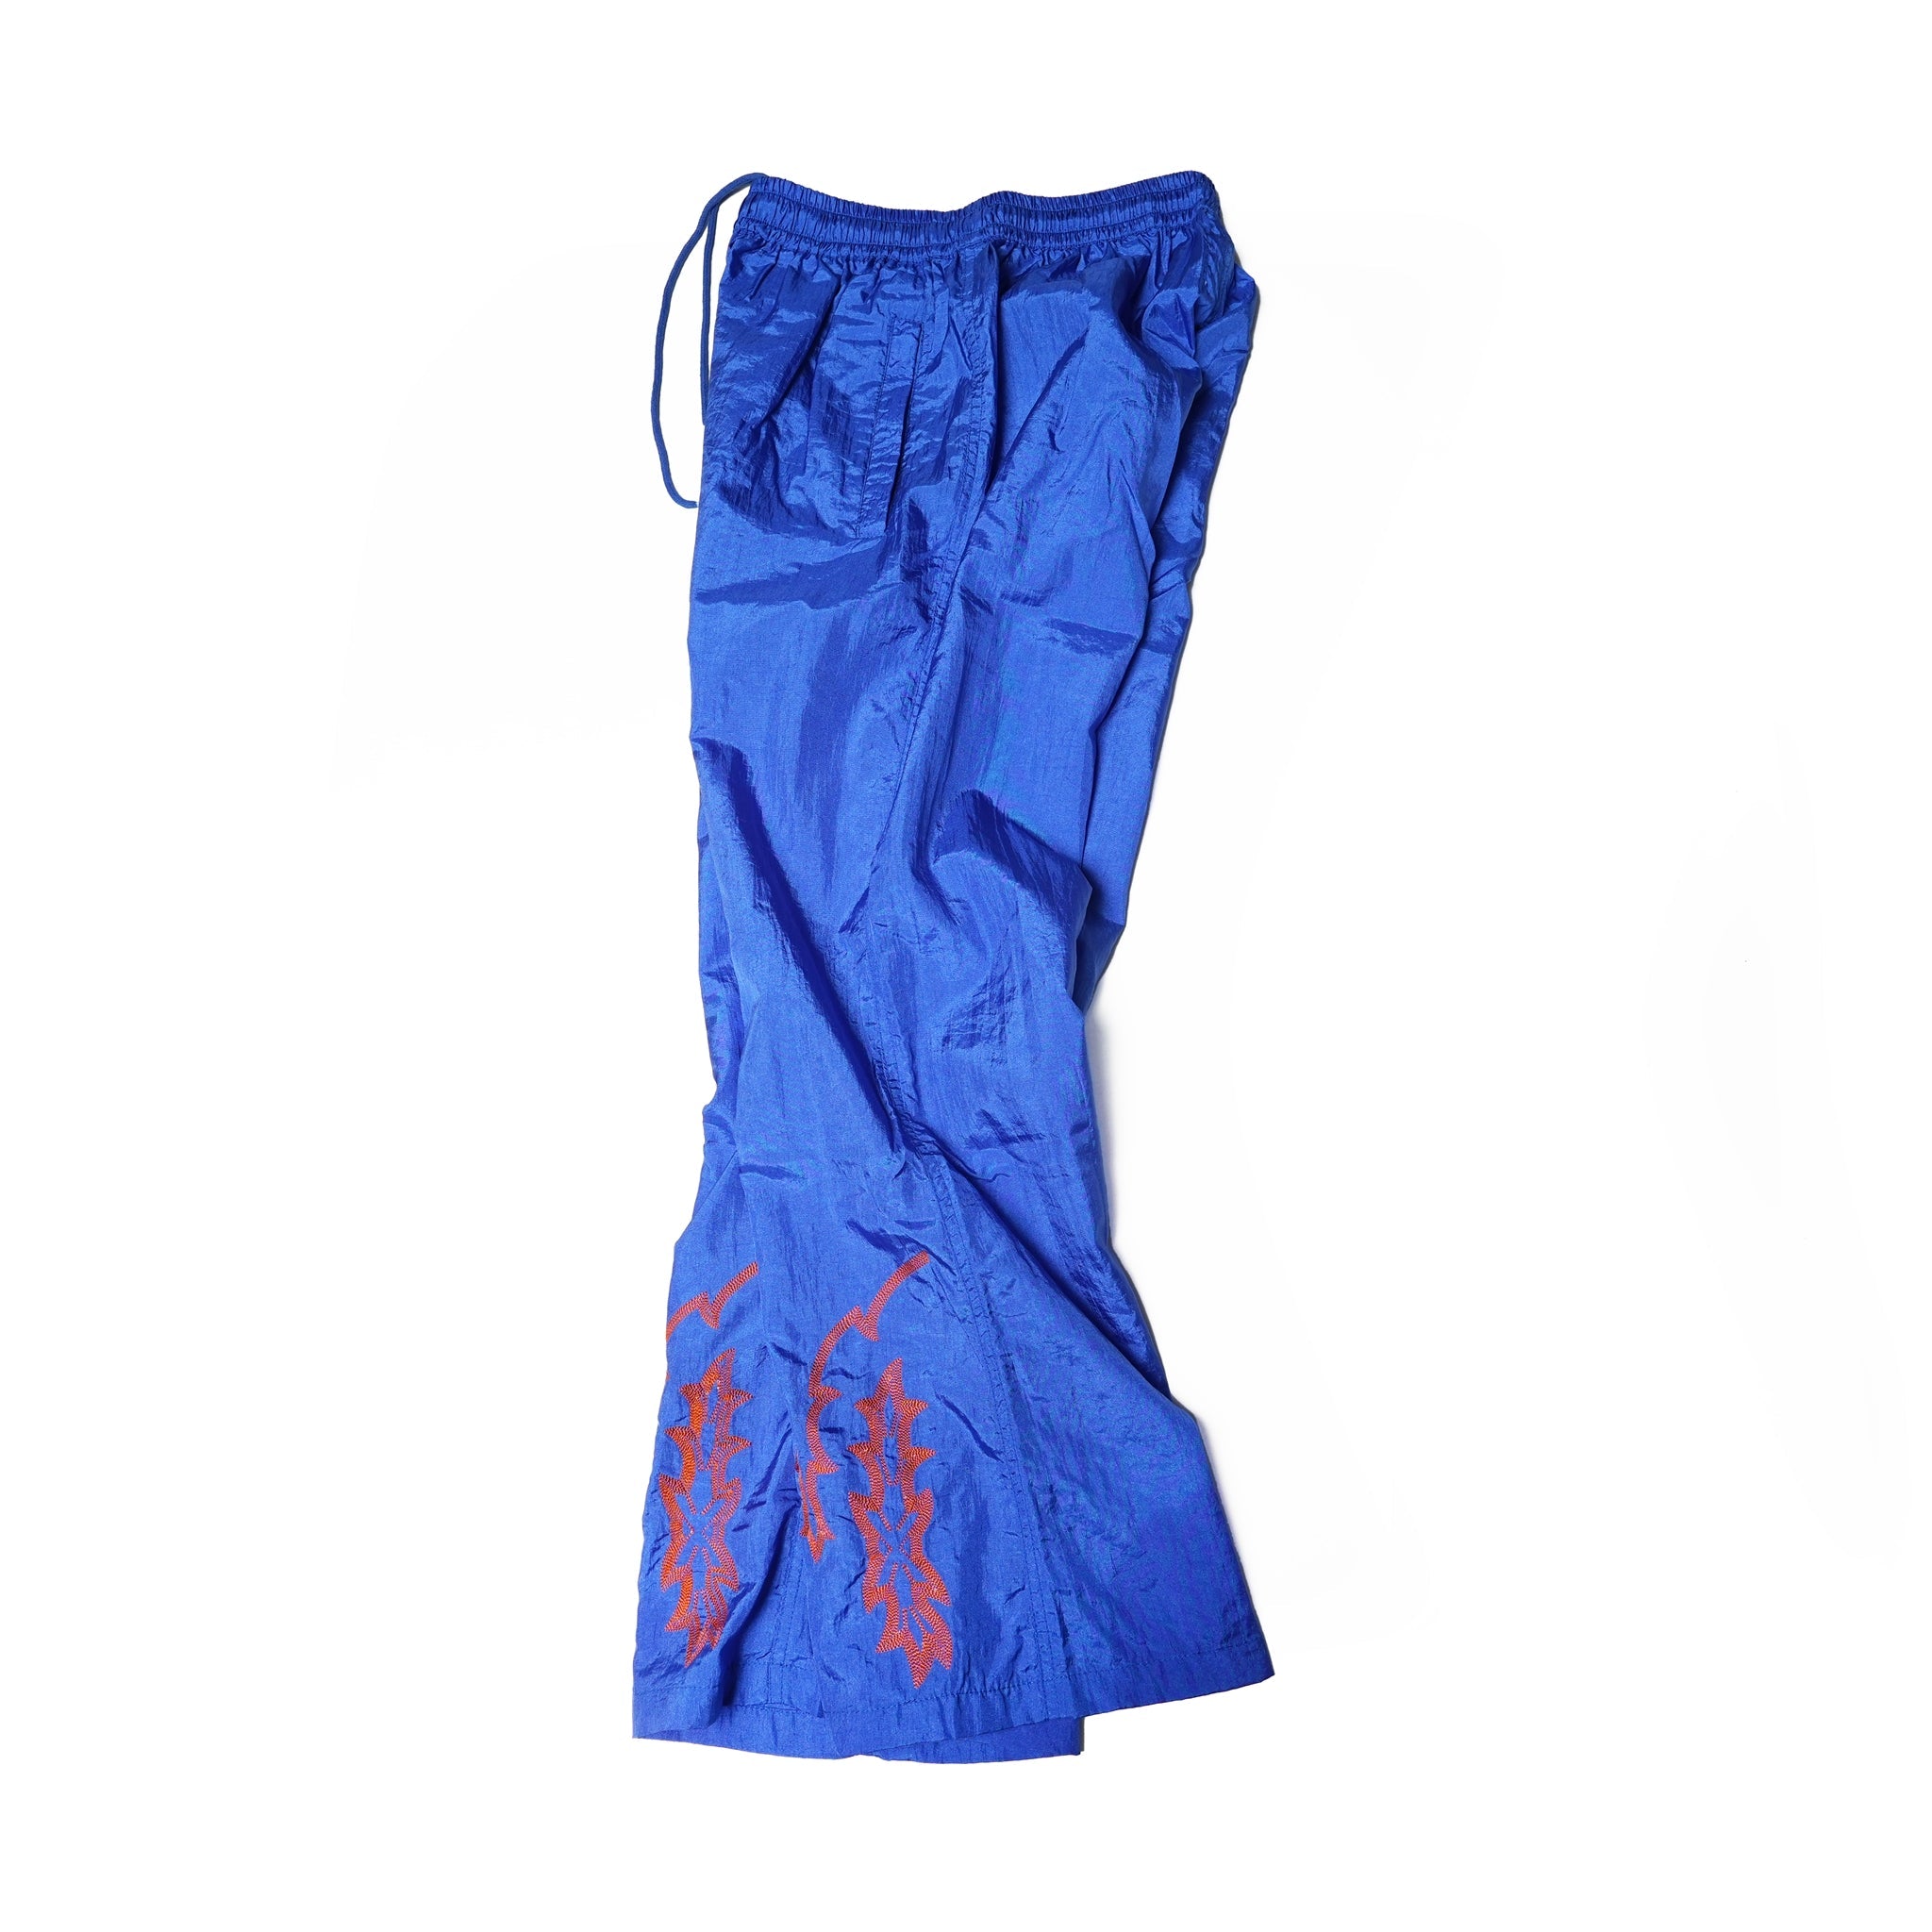 No:OK241-501_BLU | Name:Nylon Embroidery Pants | Color:Blu【OK_オーケー】【入荷予定アイテム・入荷連絡可能】